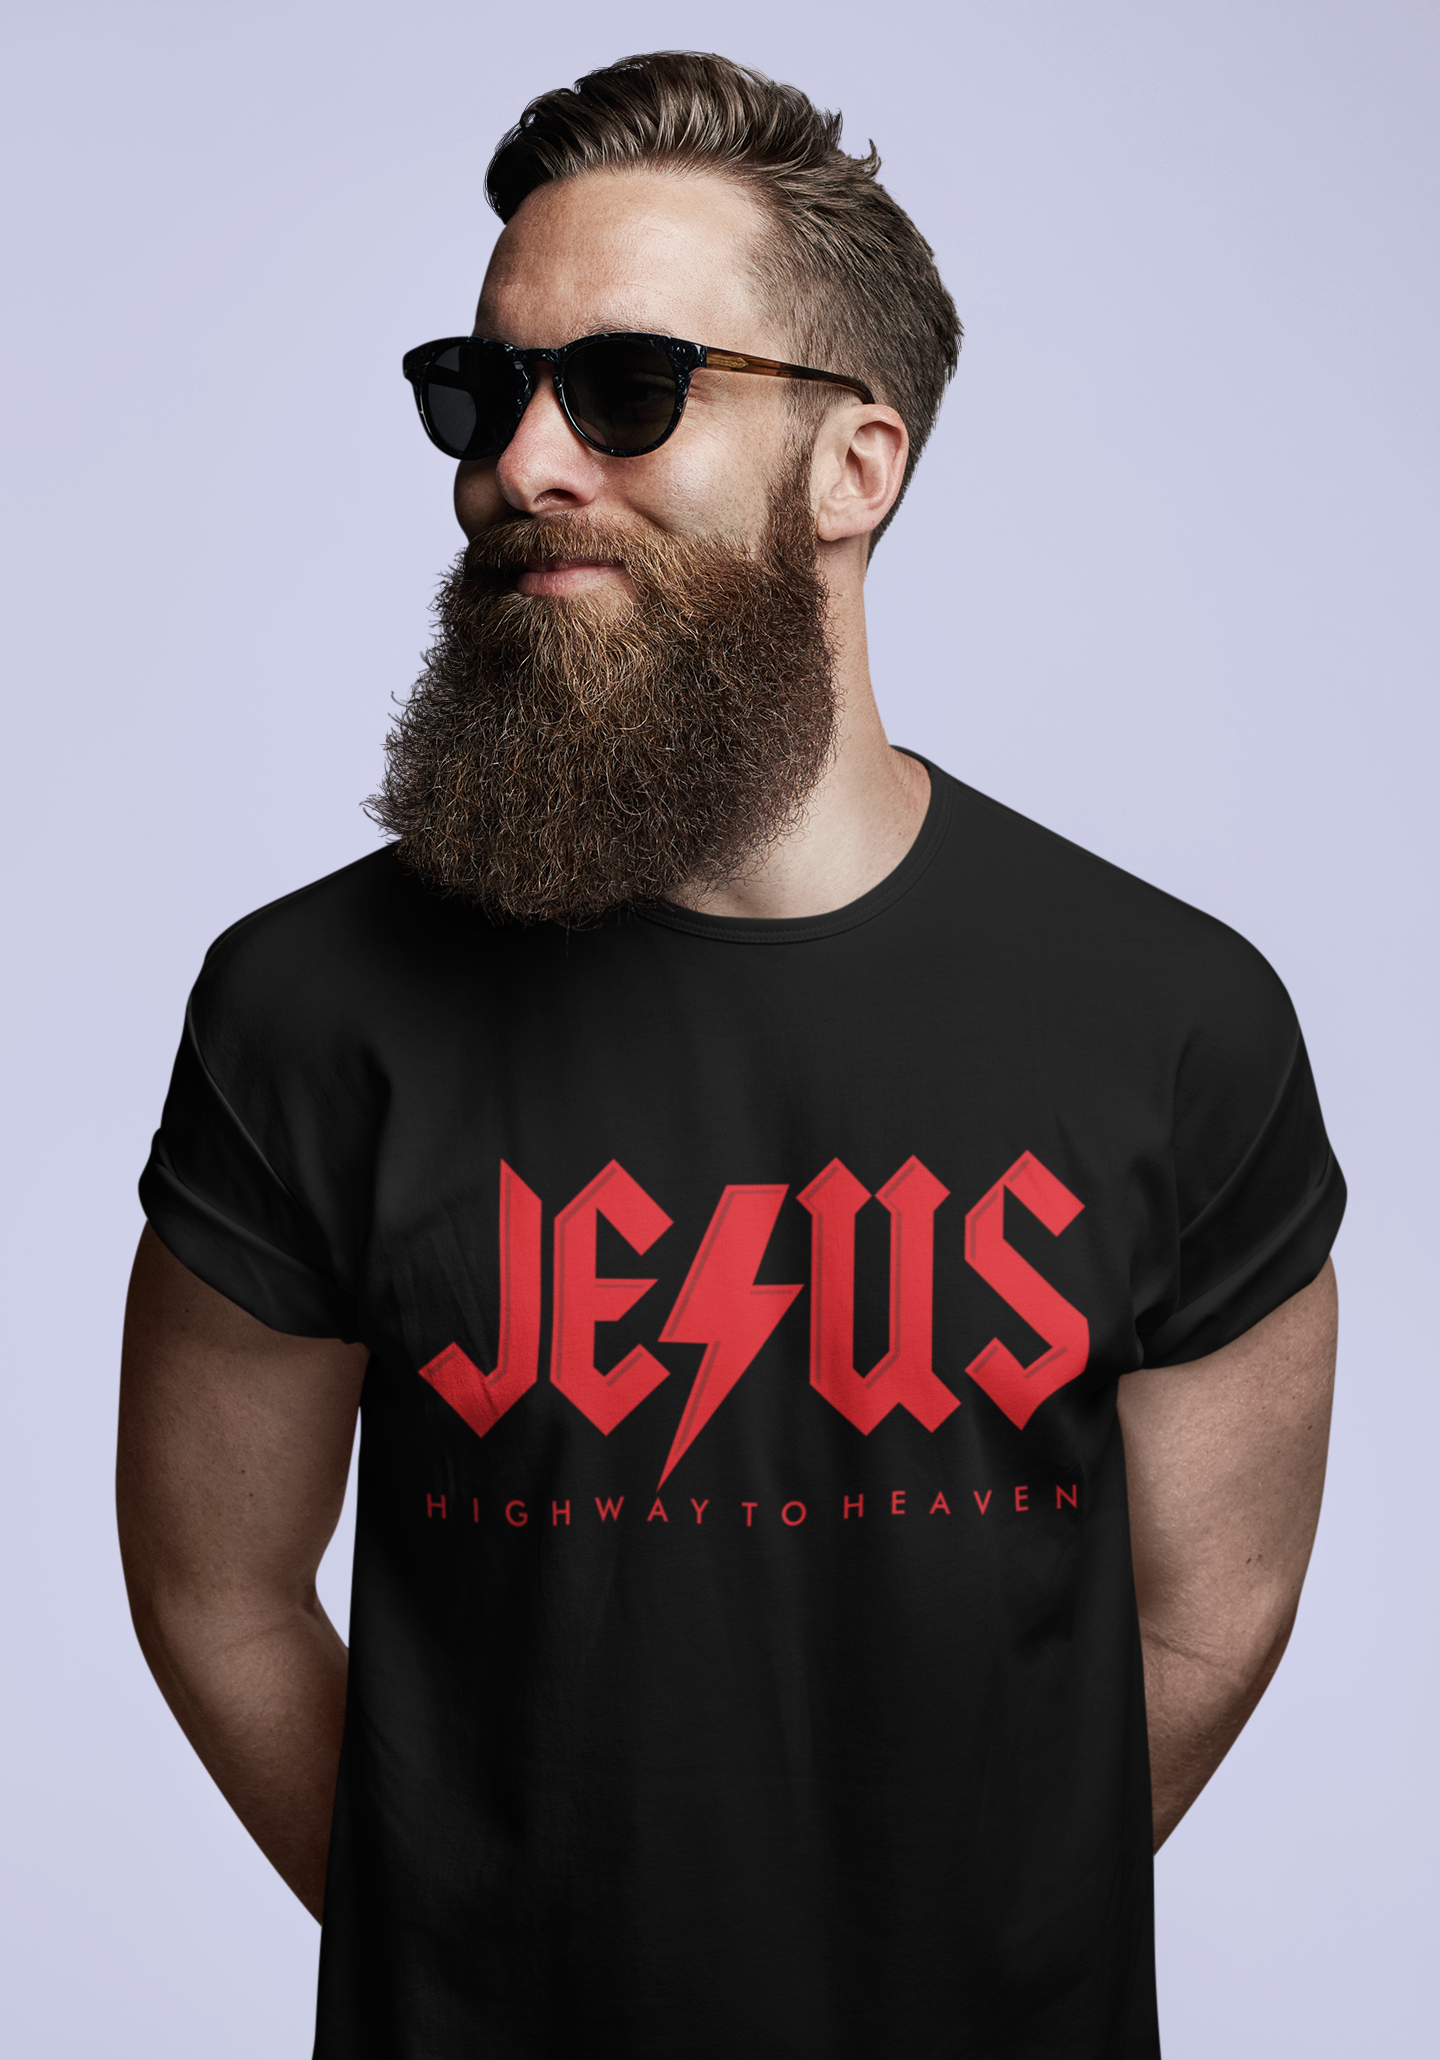 ULTRABASIC Men's T-Shirt Jesus Highway to Heaven - Religious Shirt